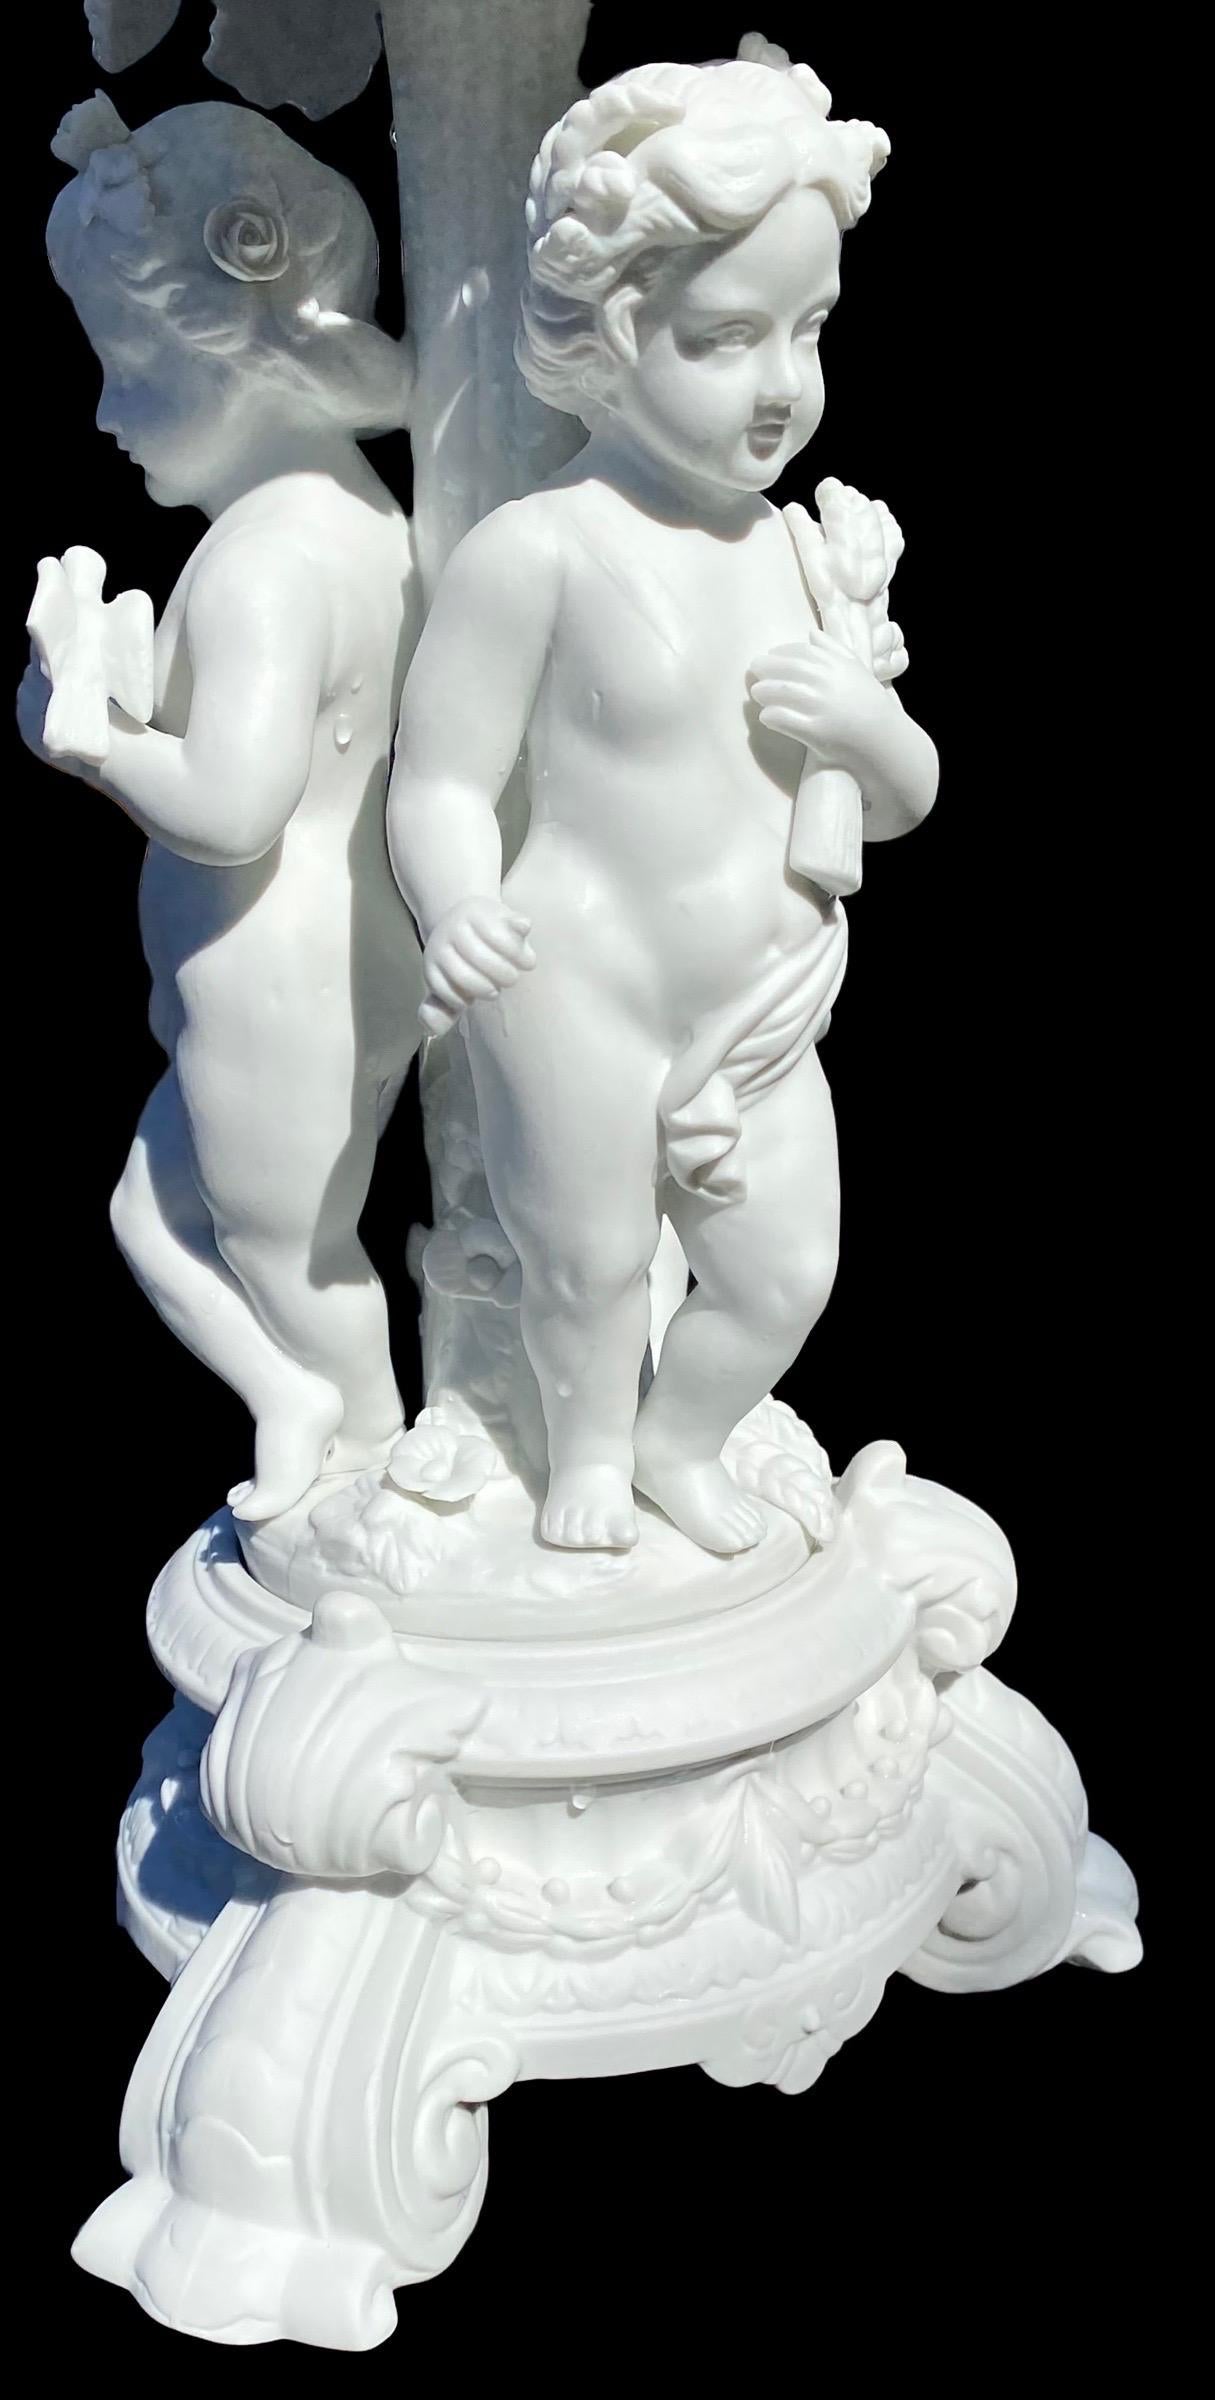 Glazed Elegant 19th Century English Parian Porcelain Centerpiece